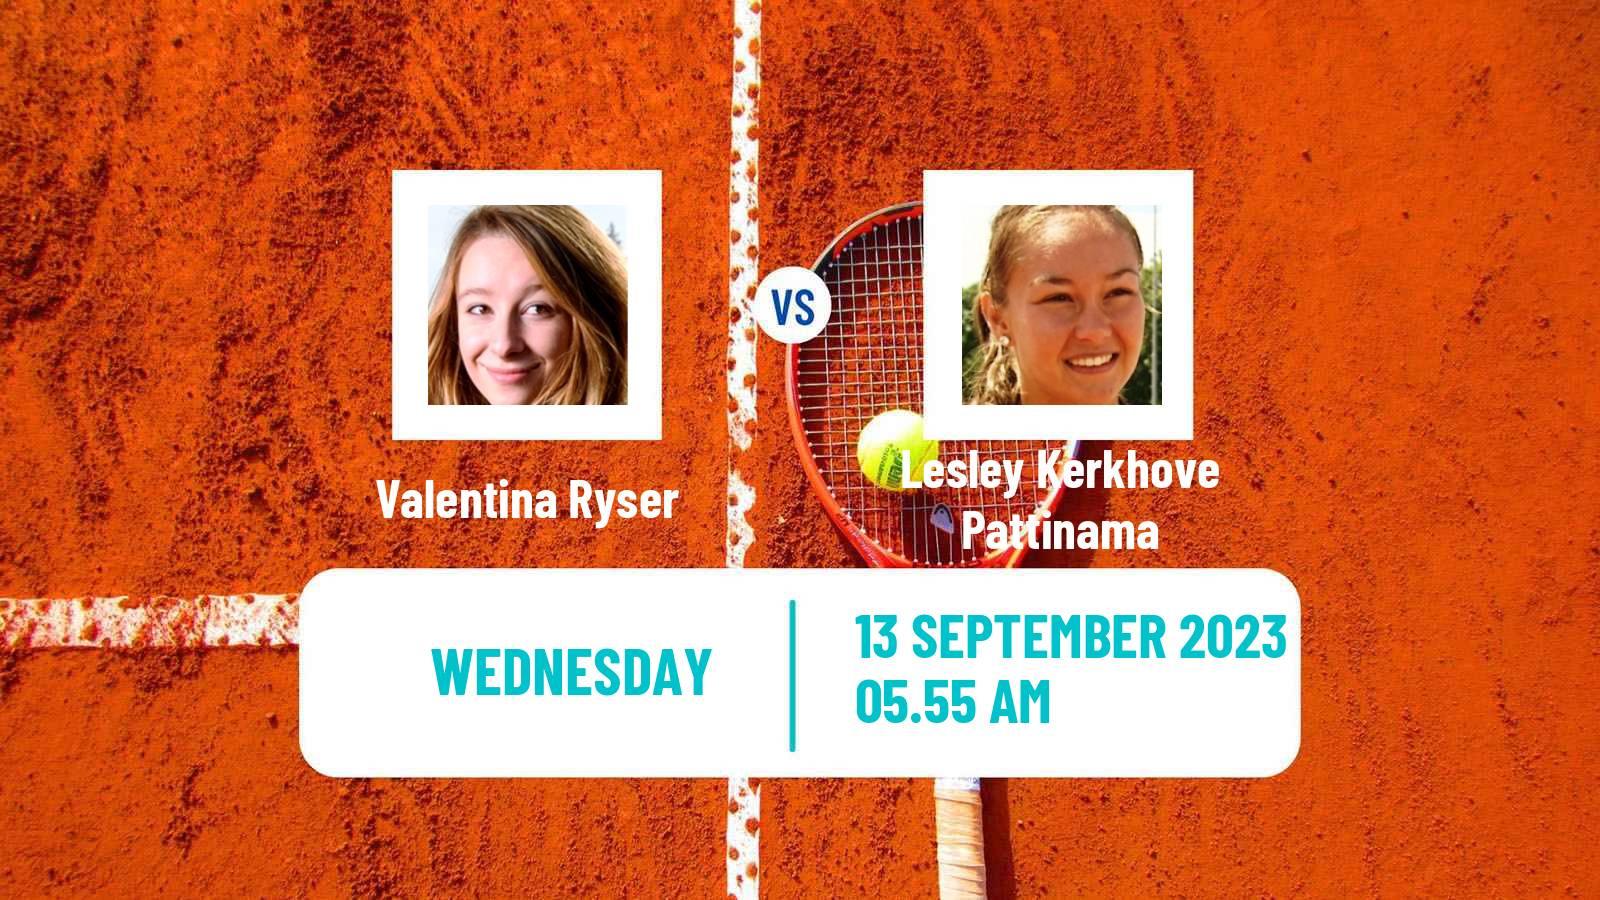 Tennis ITF W80 Le Neubourg Women Valentina Ryser - Lesley Kerkhove Pattinama